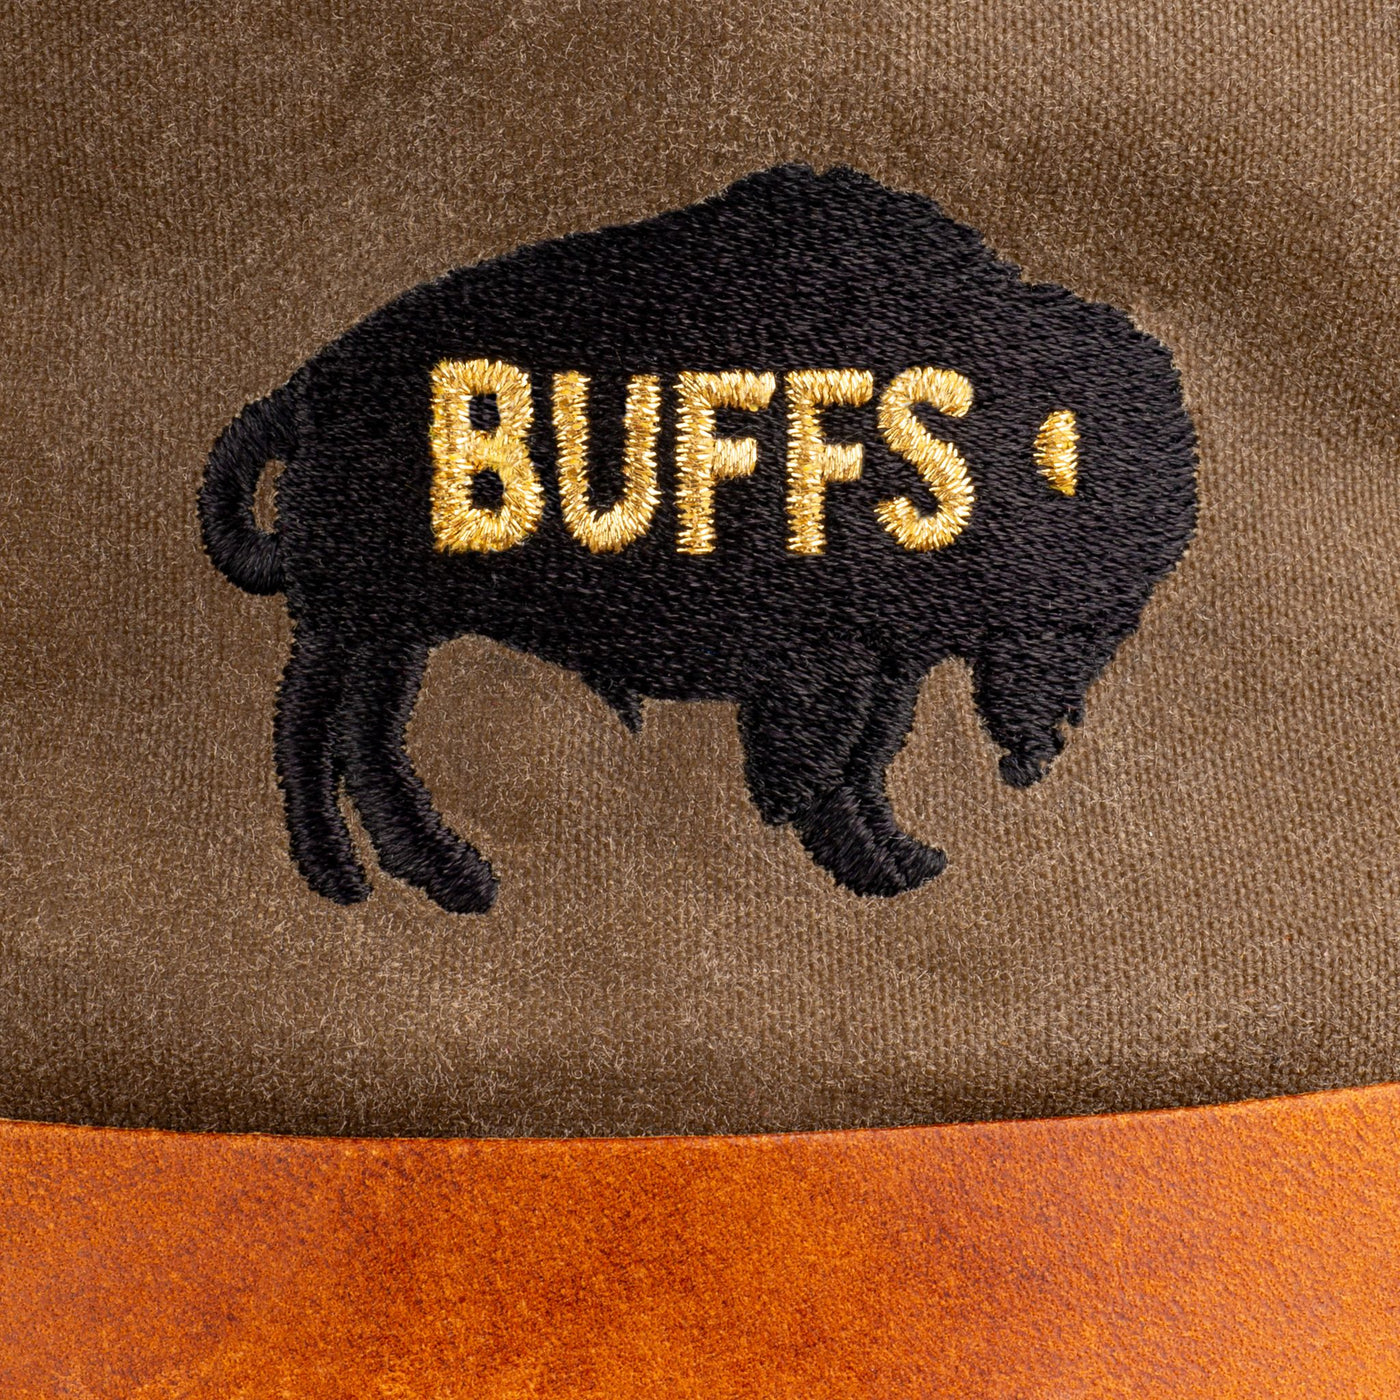 Colorado Buffaloes Waxed Canvas Hat